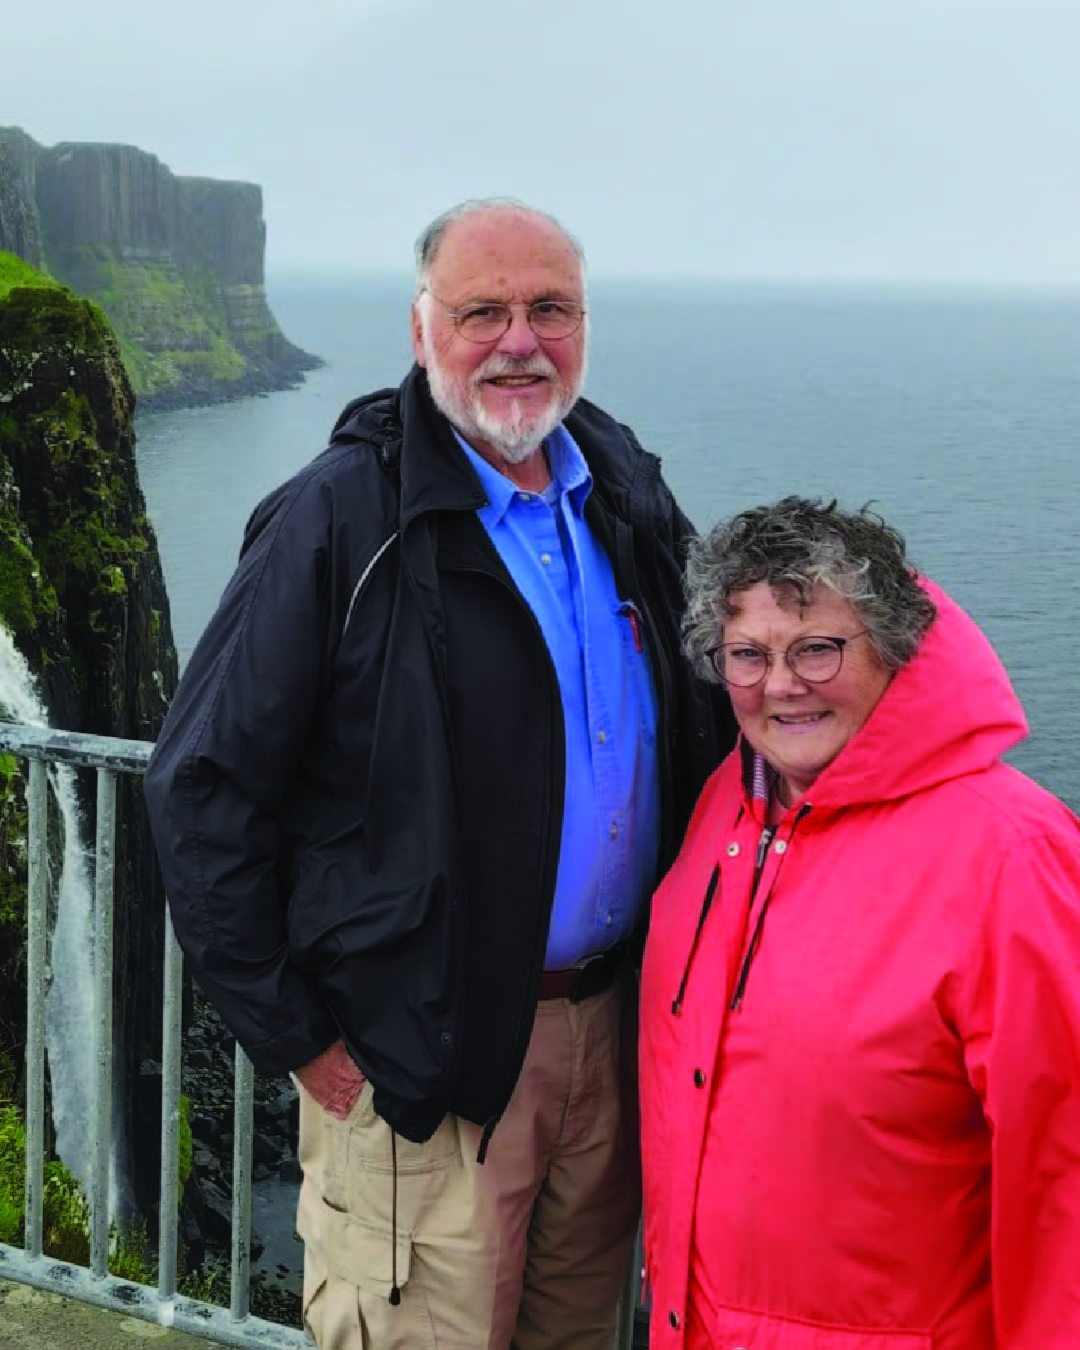 Dave and Cathy Van Doren visiting the Isle of Skye in Scotland.